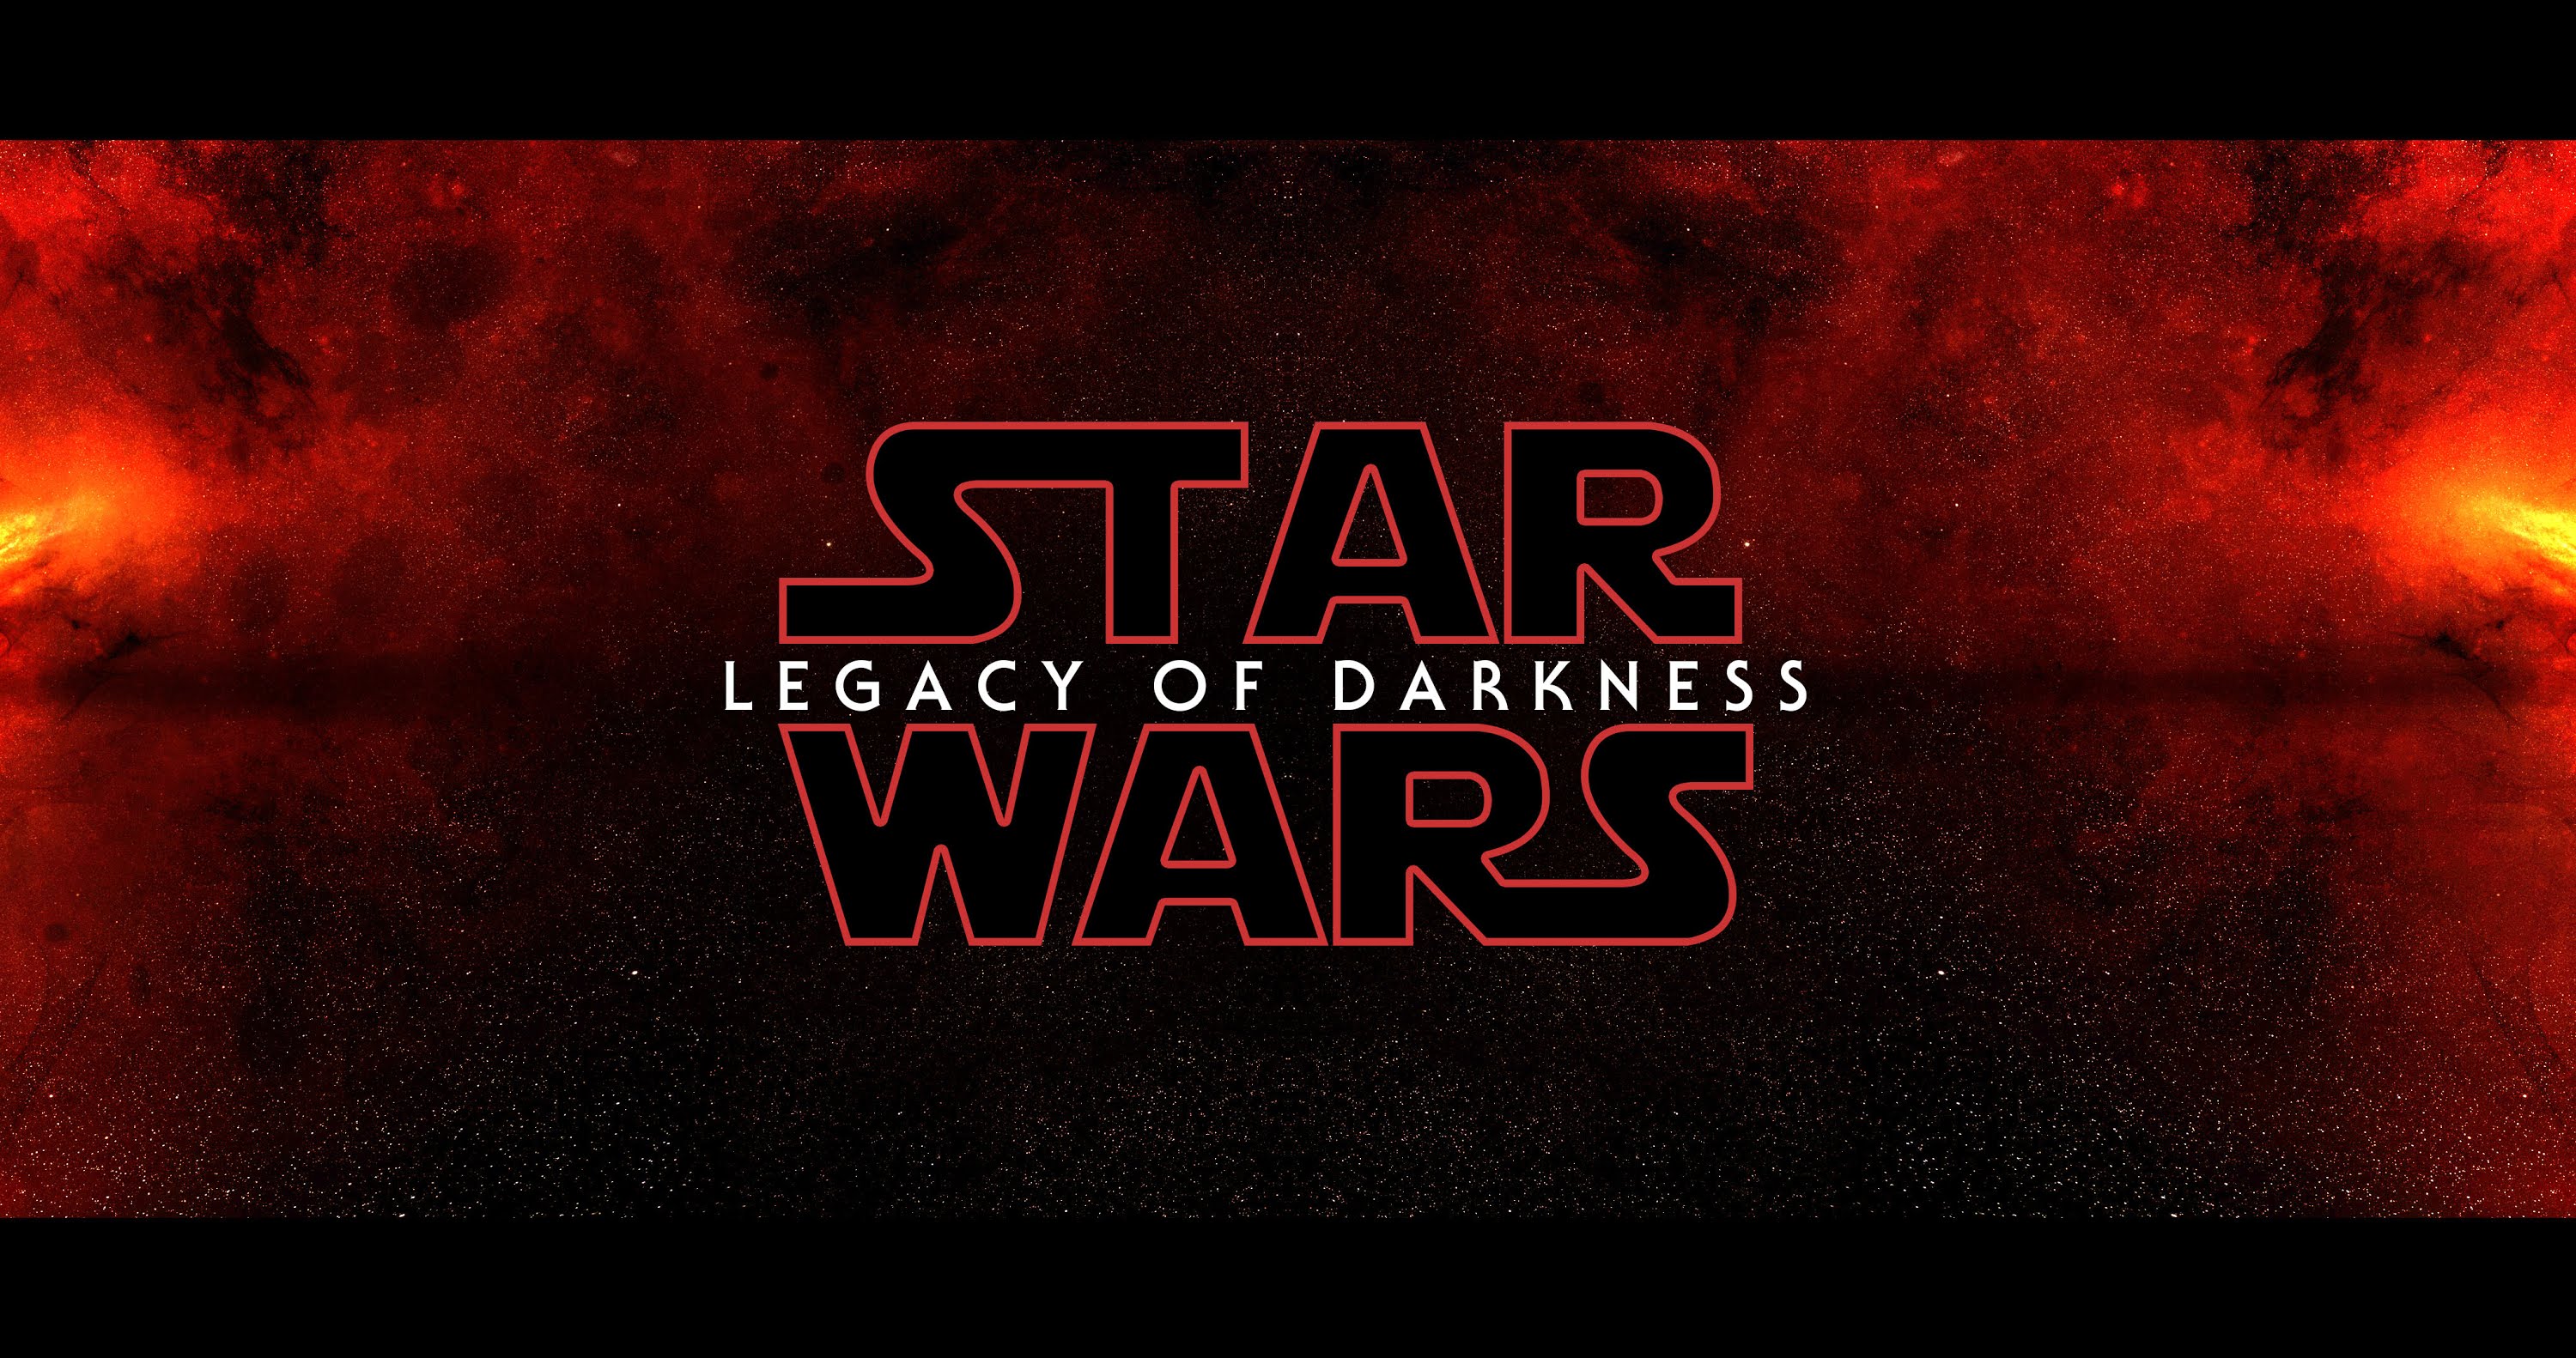 Star Wars: Legacy of Darkness